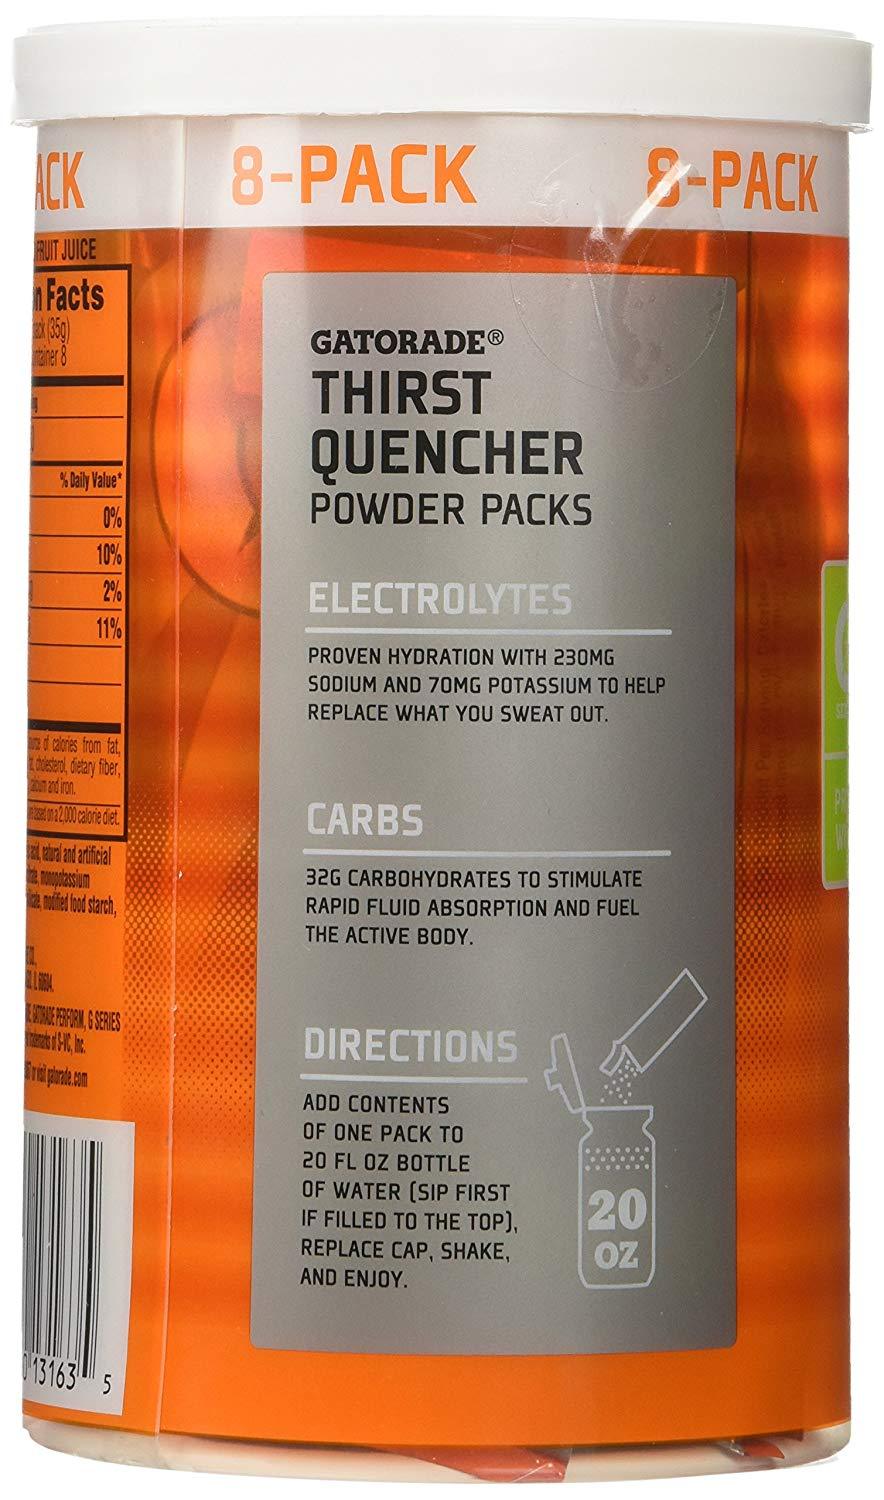 Gatorade Thirst Quencher Powder Packs Gatorade 